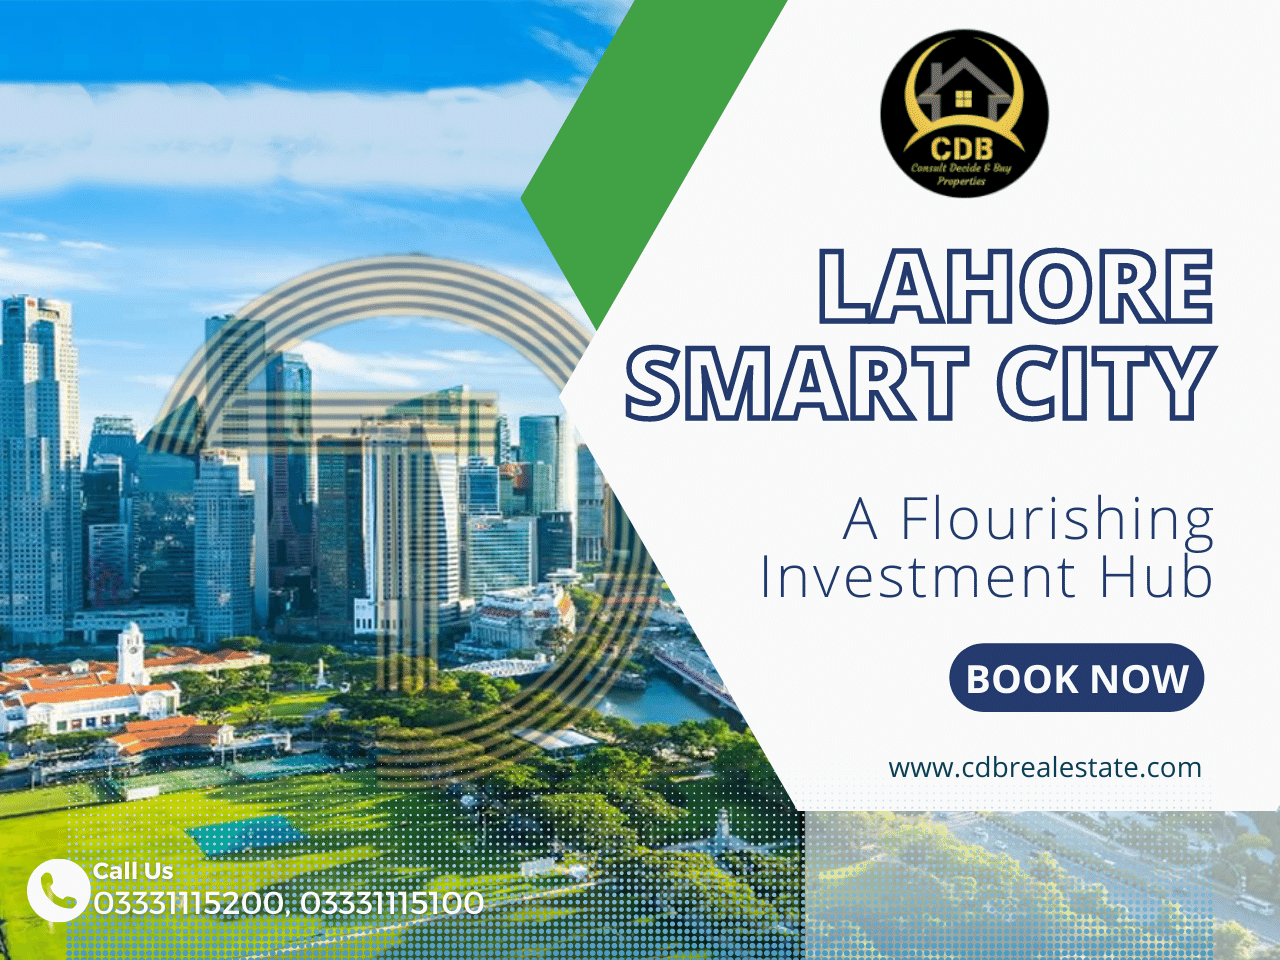 Lahore Smart City Investment Hub